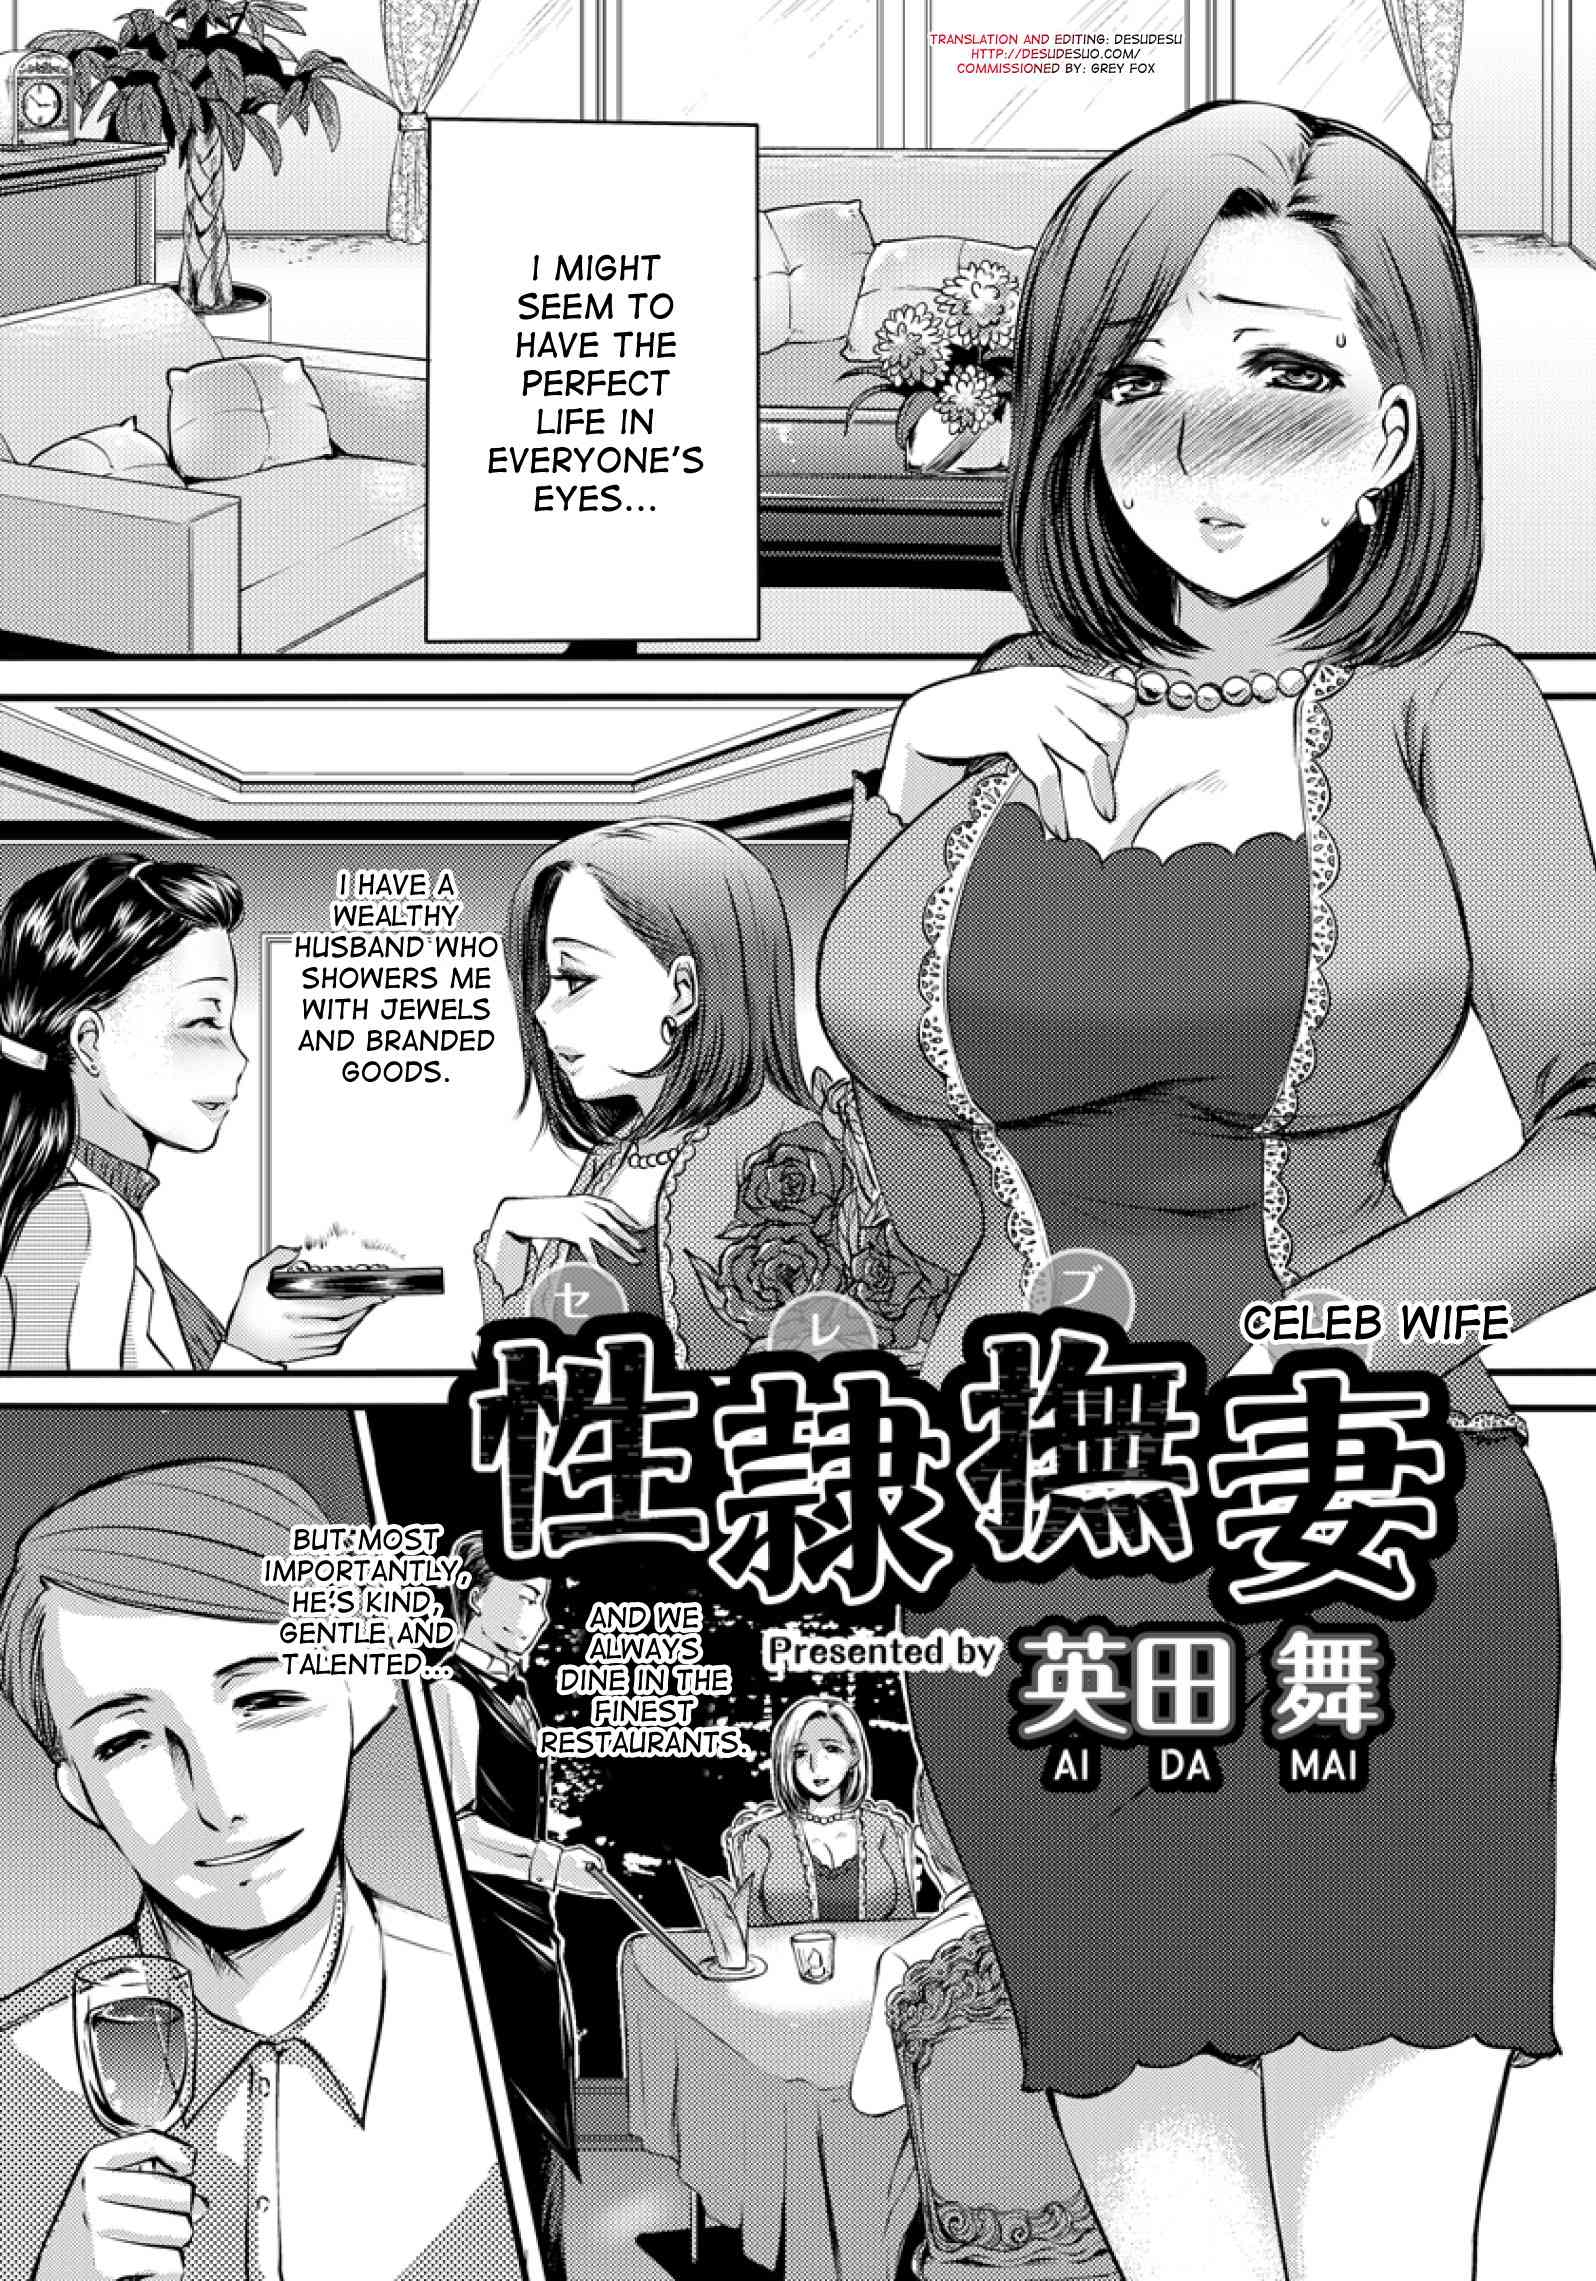 Reading Celeb Wife Hentai 1 Celeb Wife [oneshot] Page 1 Hentai Manga Online At Hentai2read